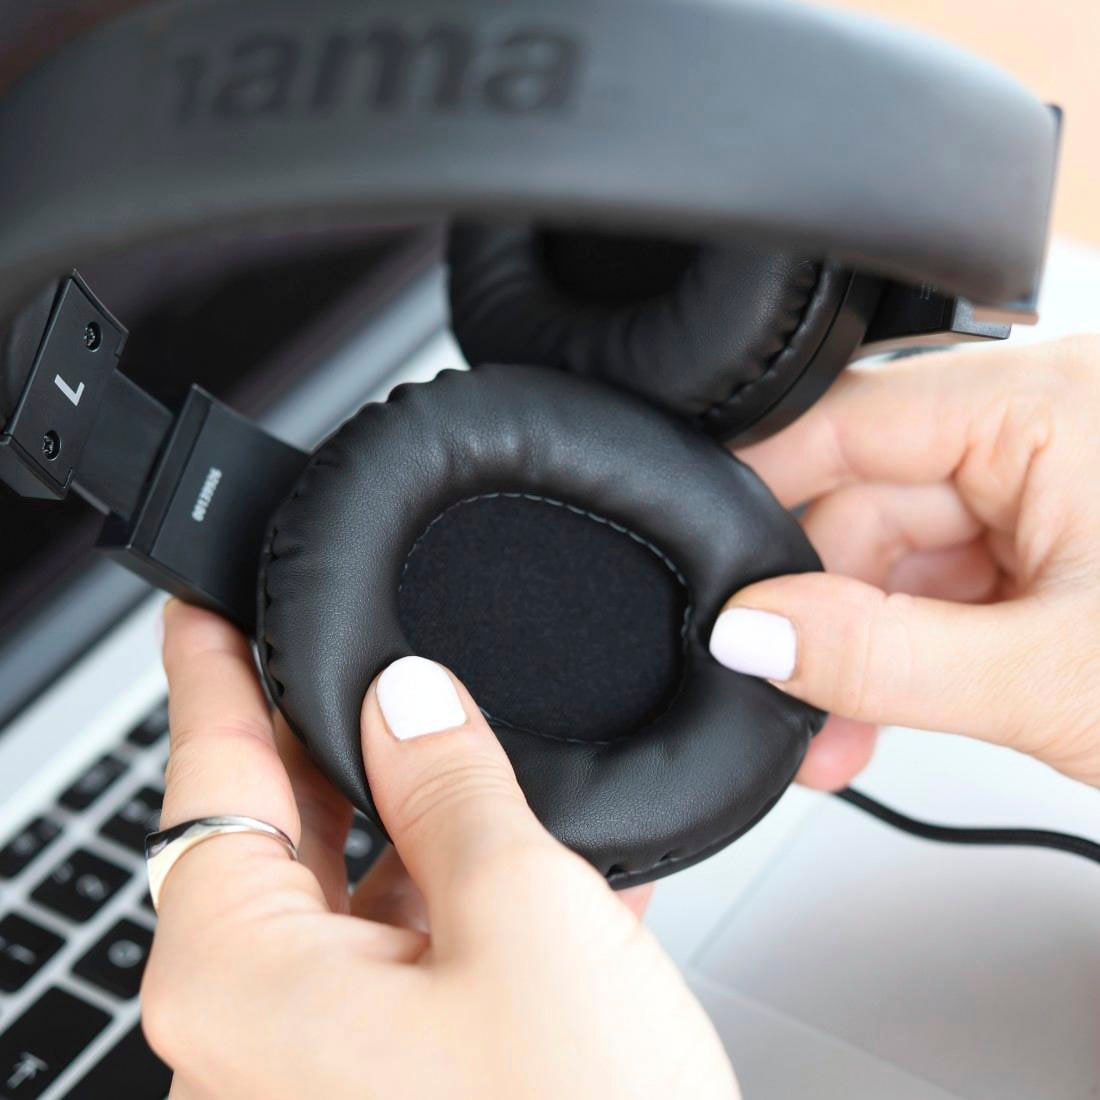 Hama Headset »PC-Office-Headset "HS-P350", Stereo, Schwarz«